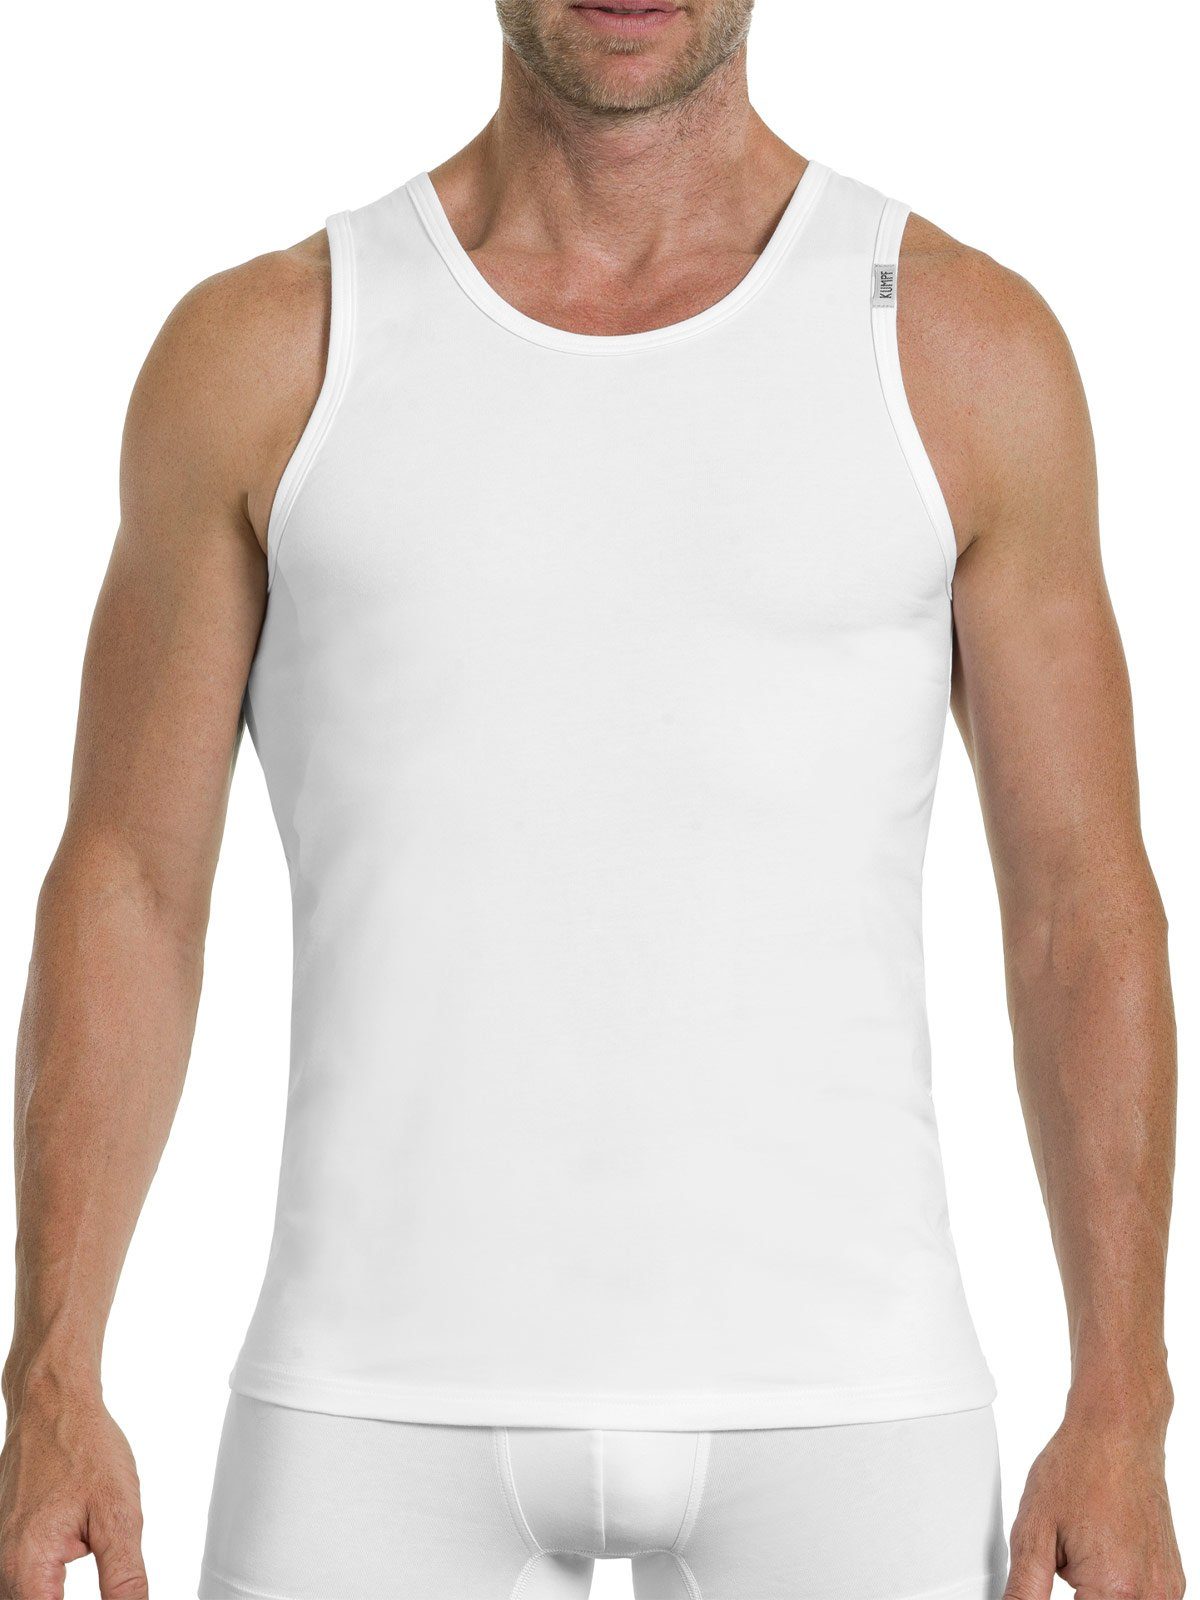 KUMPF Achselhemd Herren Unterhemd Bio Cotton (Stück, 1-St) hohe Markenqualität weiss